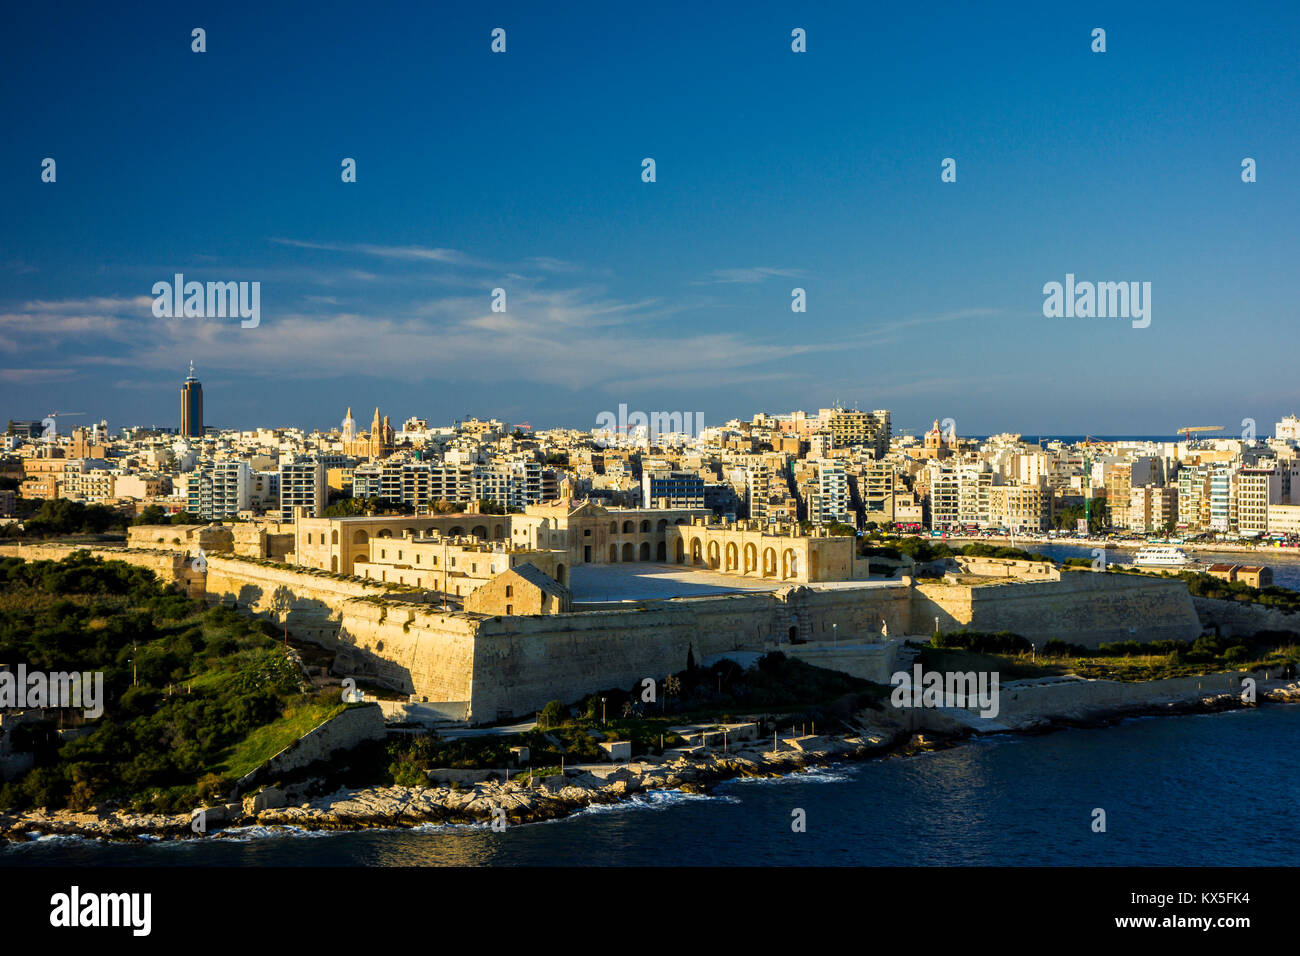 Manoel island opposite Valletta, european capital of culture in 2018, Malta, Europe Stock Photo